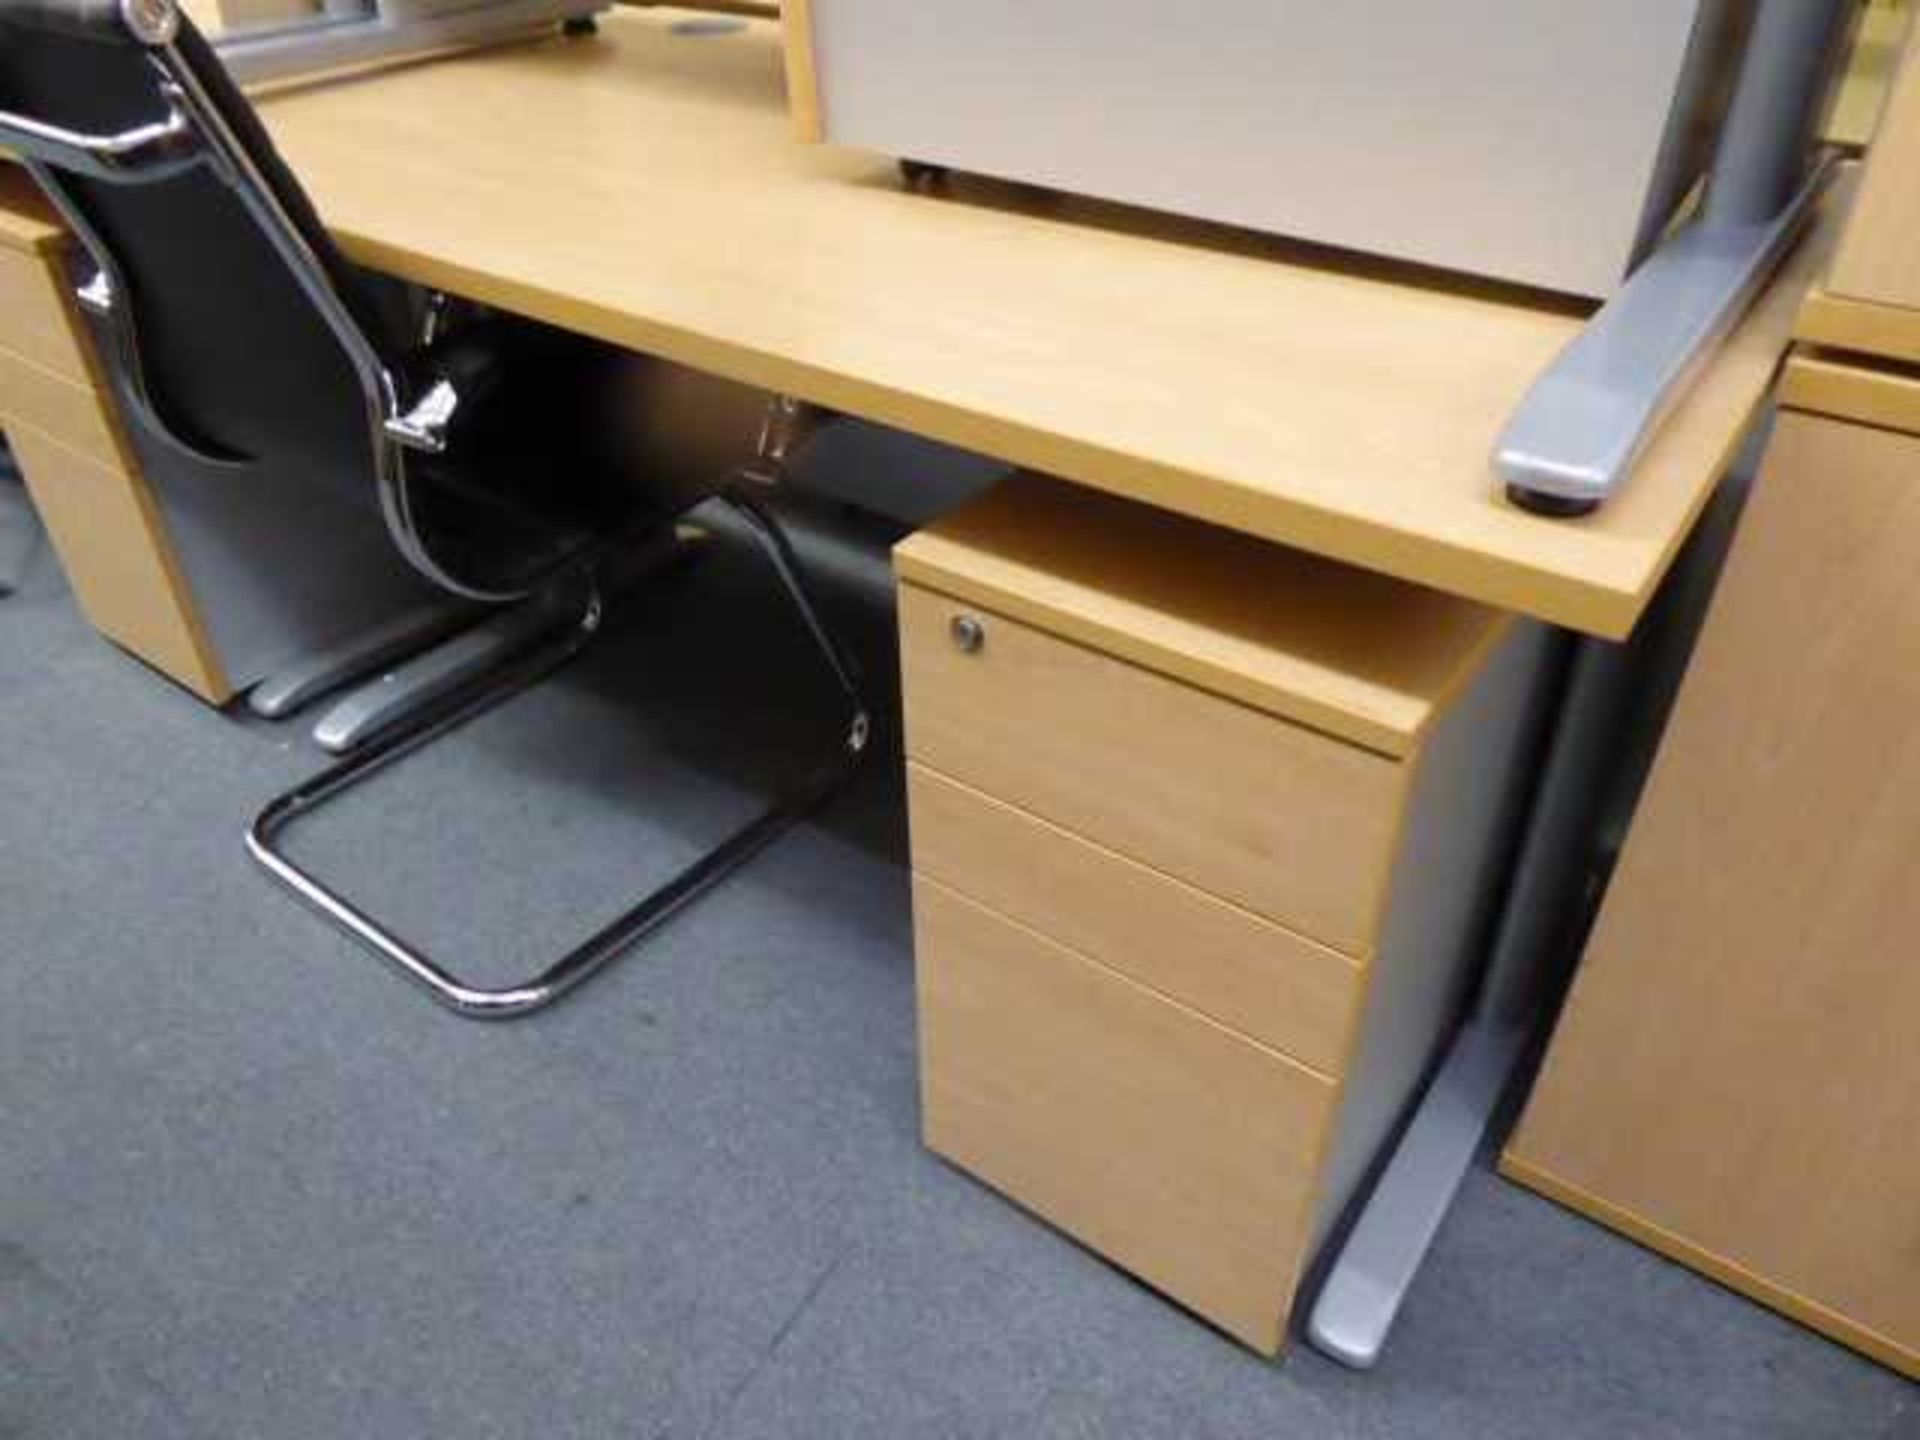 2 140cm beech straight front desks on cantilever legs with under desk 3 drawer pedestals - Image 2 of 2